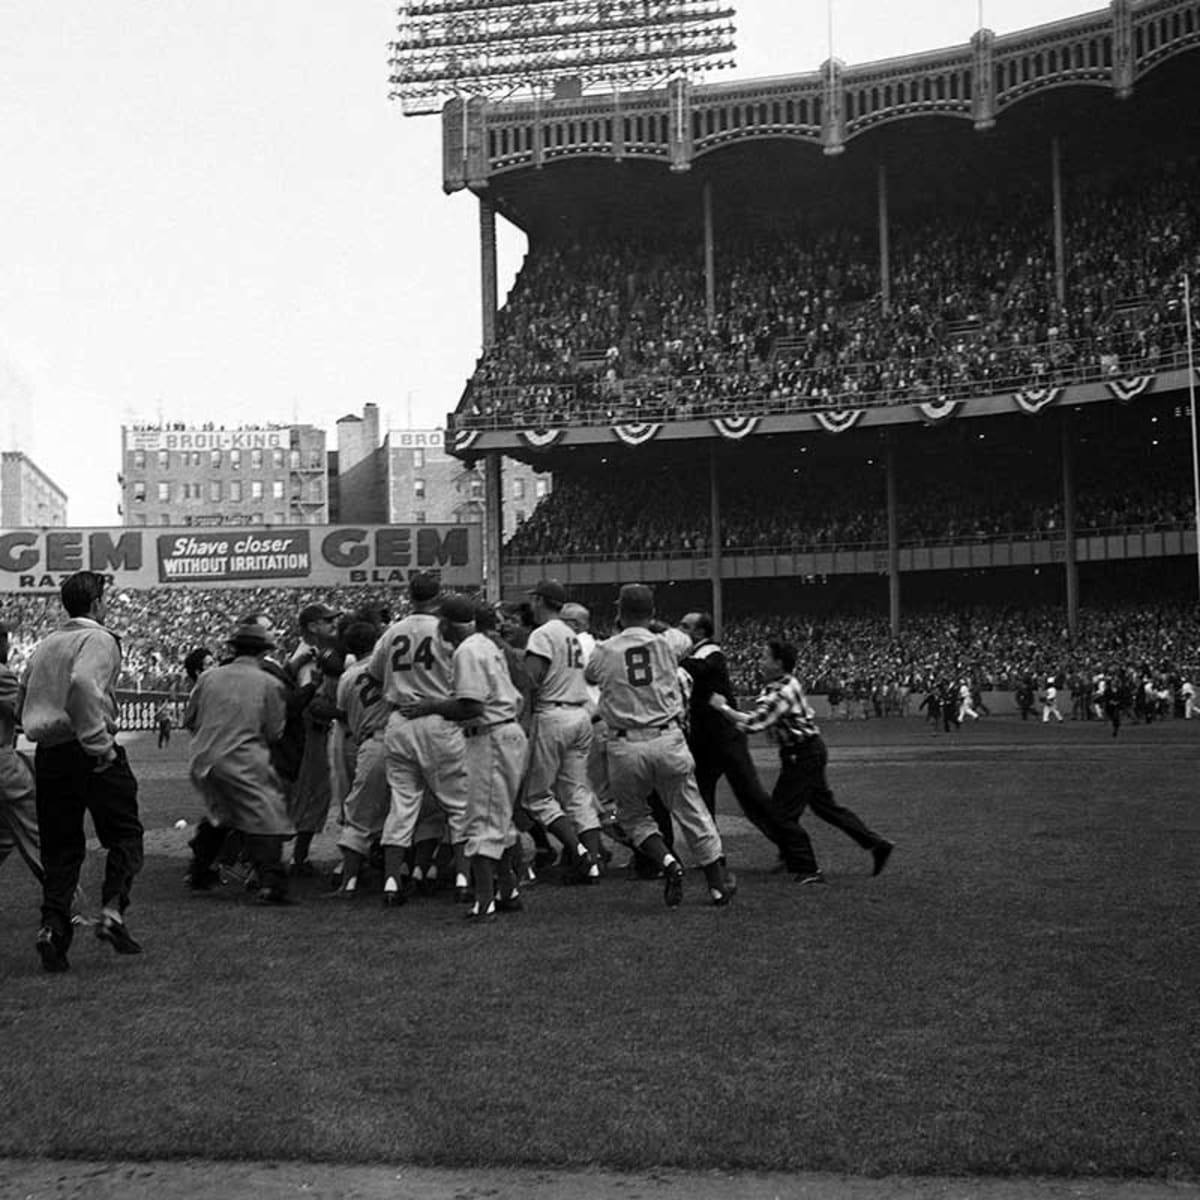 1955 Brooklyn Dodgers World Champions Team Photo - Row One Brand